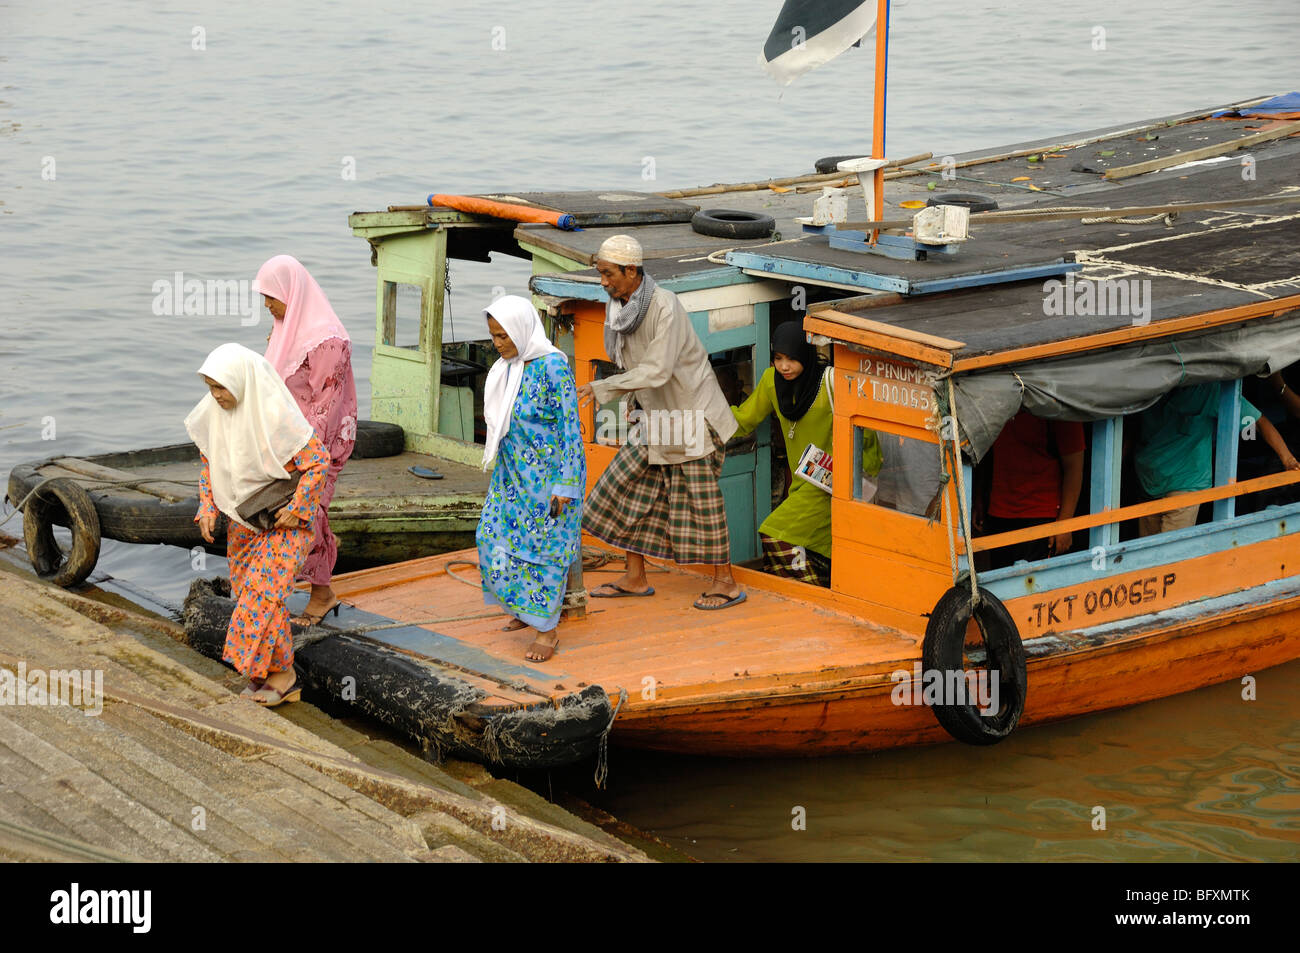 Malay or Malaysian Muslim Women in Islamic Dress Leave a Ferry Boat on the Waterfront at Kuala Terengganu, Malaysia Stock Photo